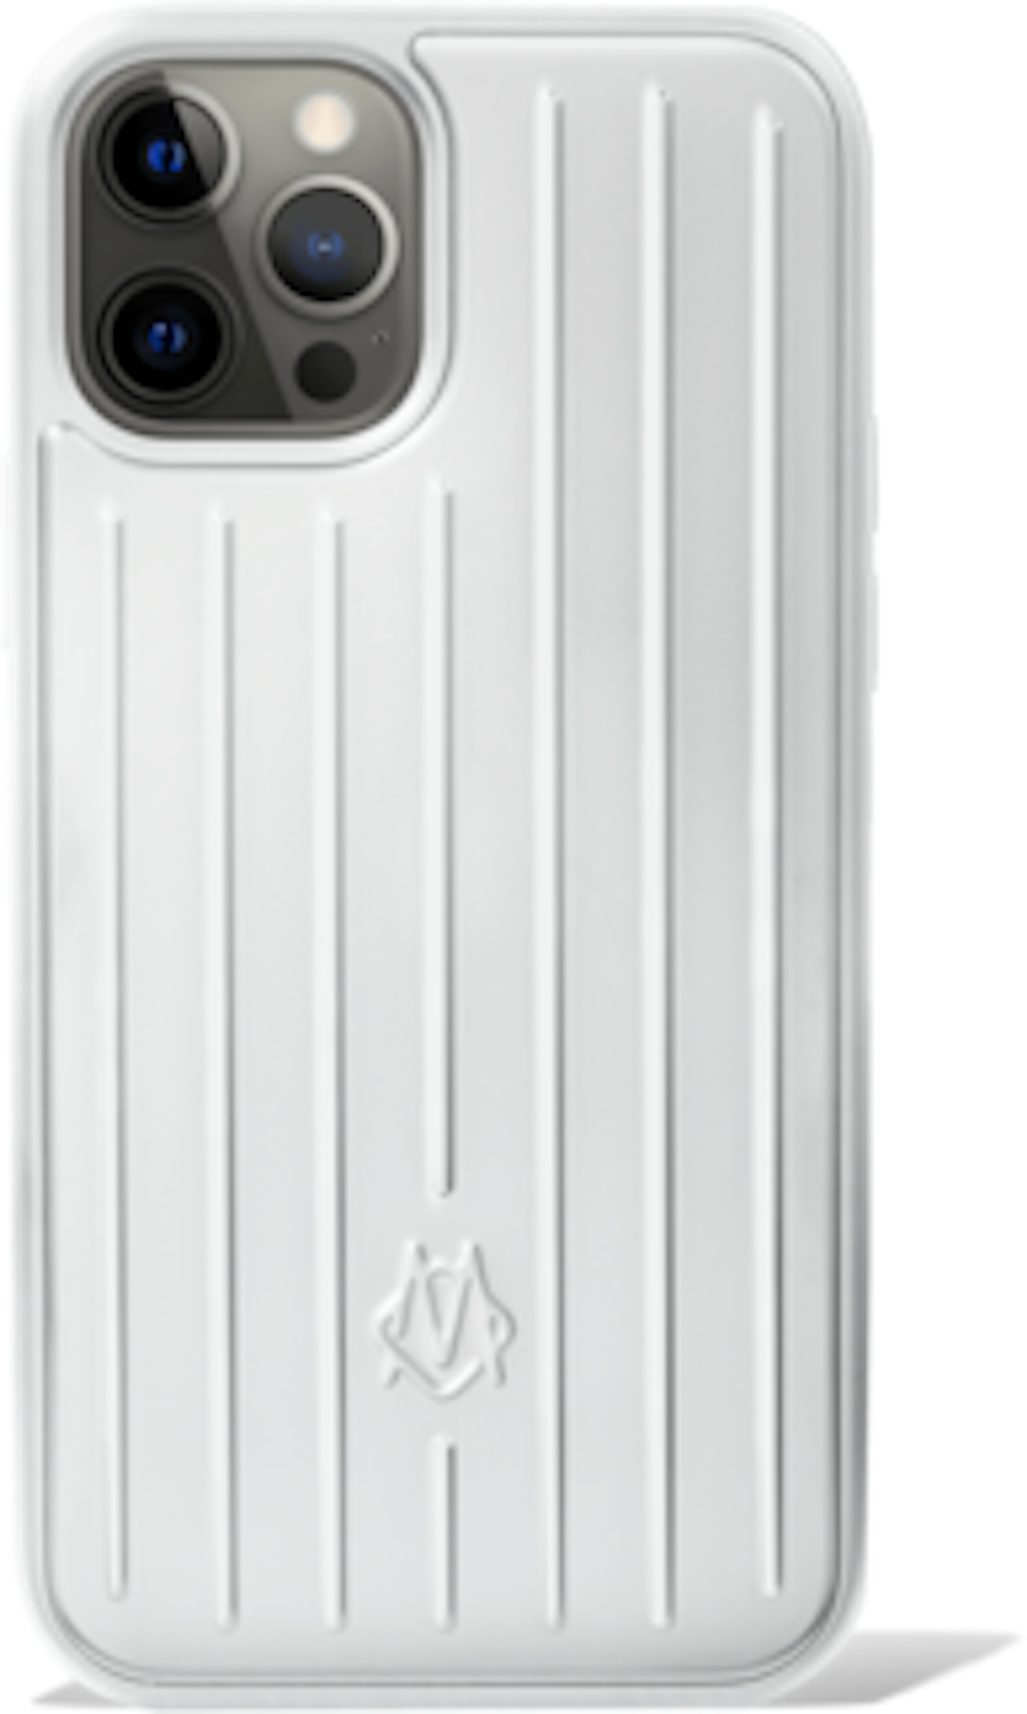 Louis Vuitton Classic Case 4 iPhone 12promax 12pro 12 Xsmax in